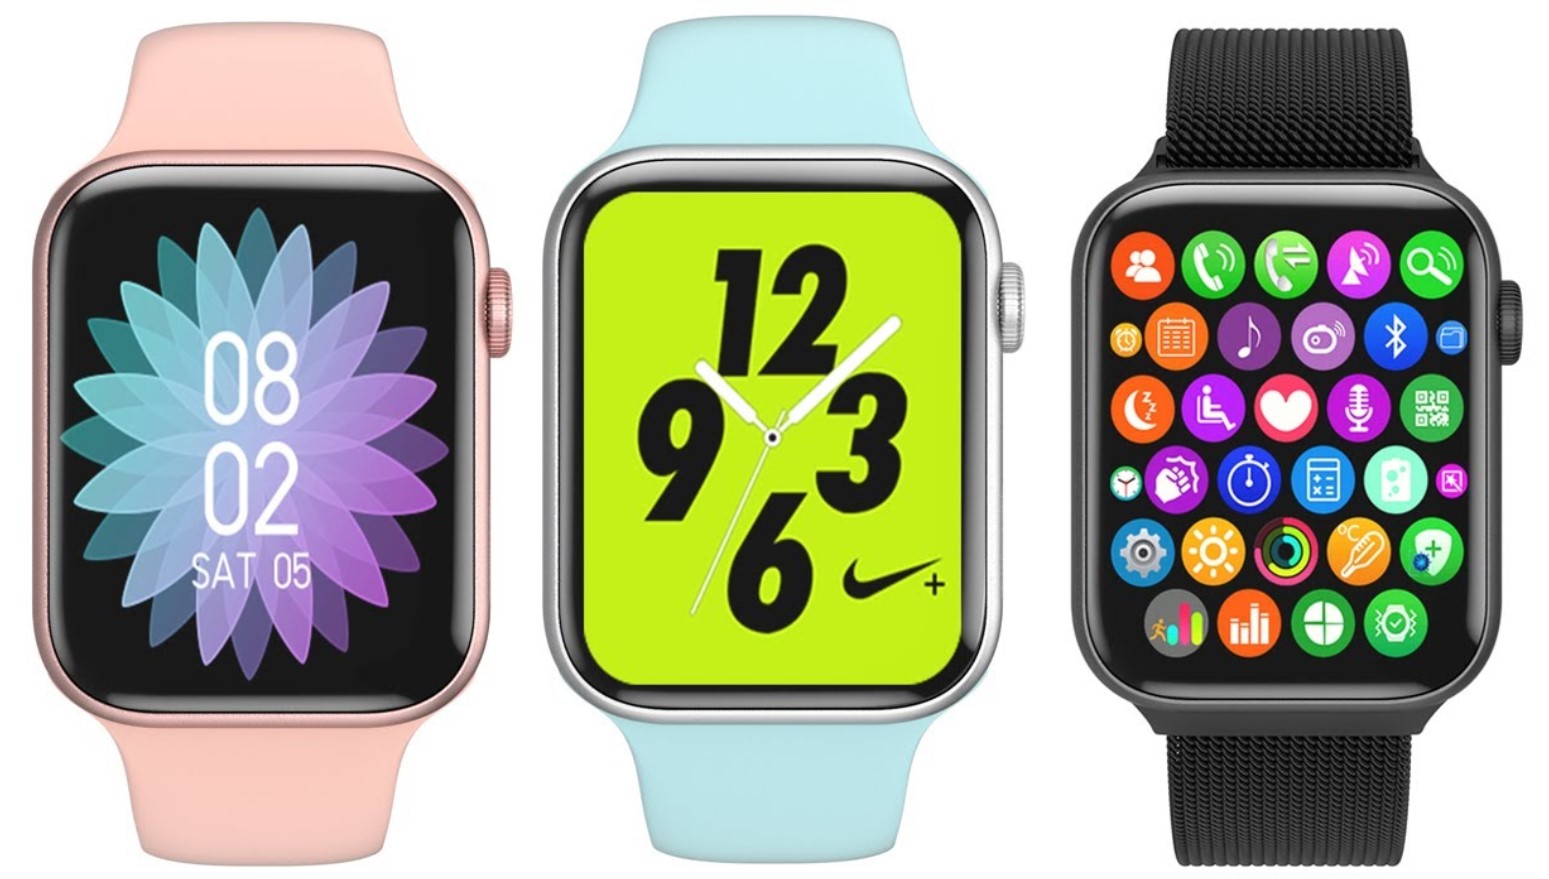 Оригинал watch 8. Часы Iwo Smart watch Iwo 11. Часы смарт вотч 8. Часы Apple IWATCH 8. Smart watch k10.